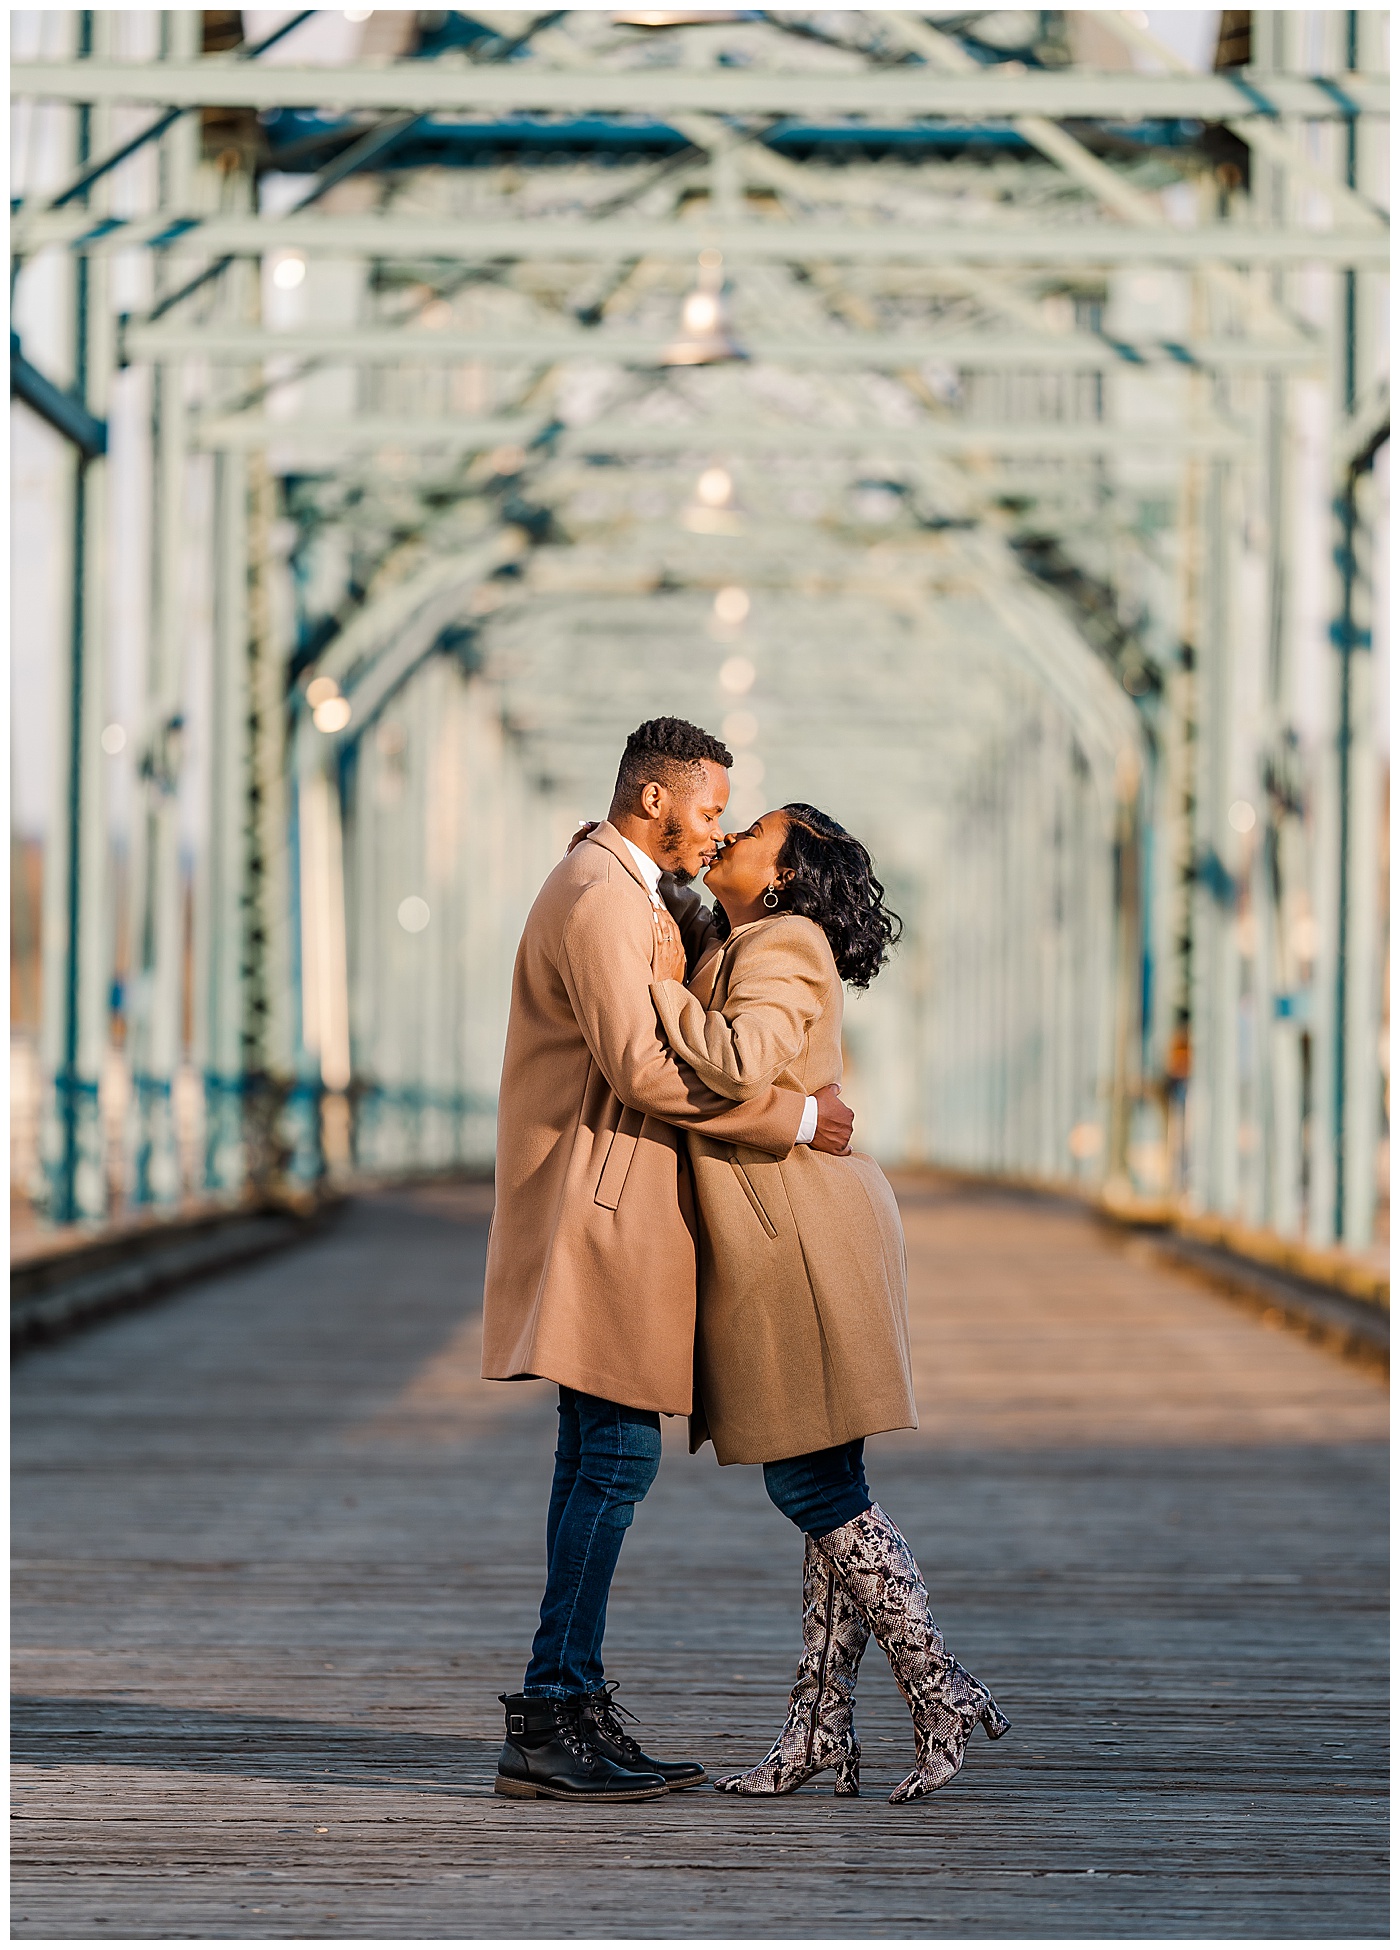 Chattanooga Walking Bridge Couple Kissing